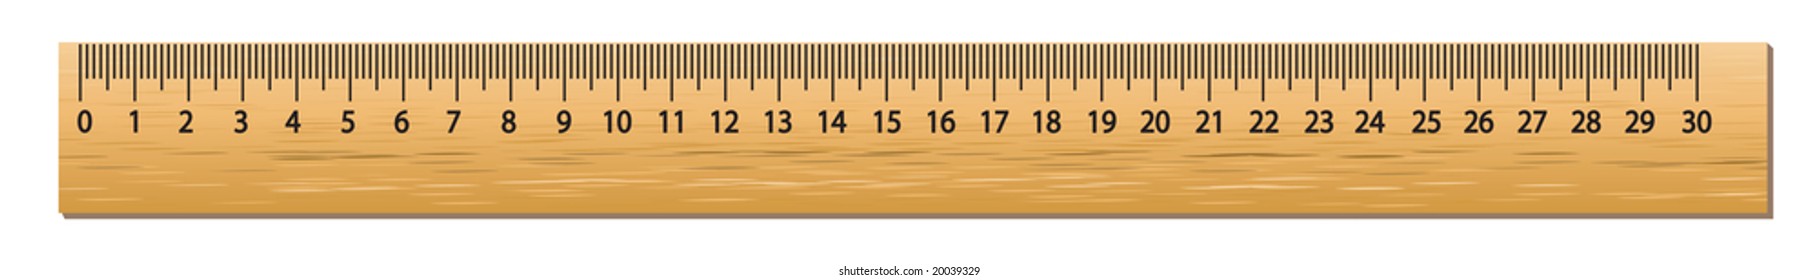 a foot ruler